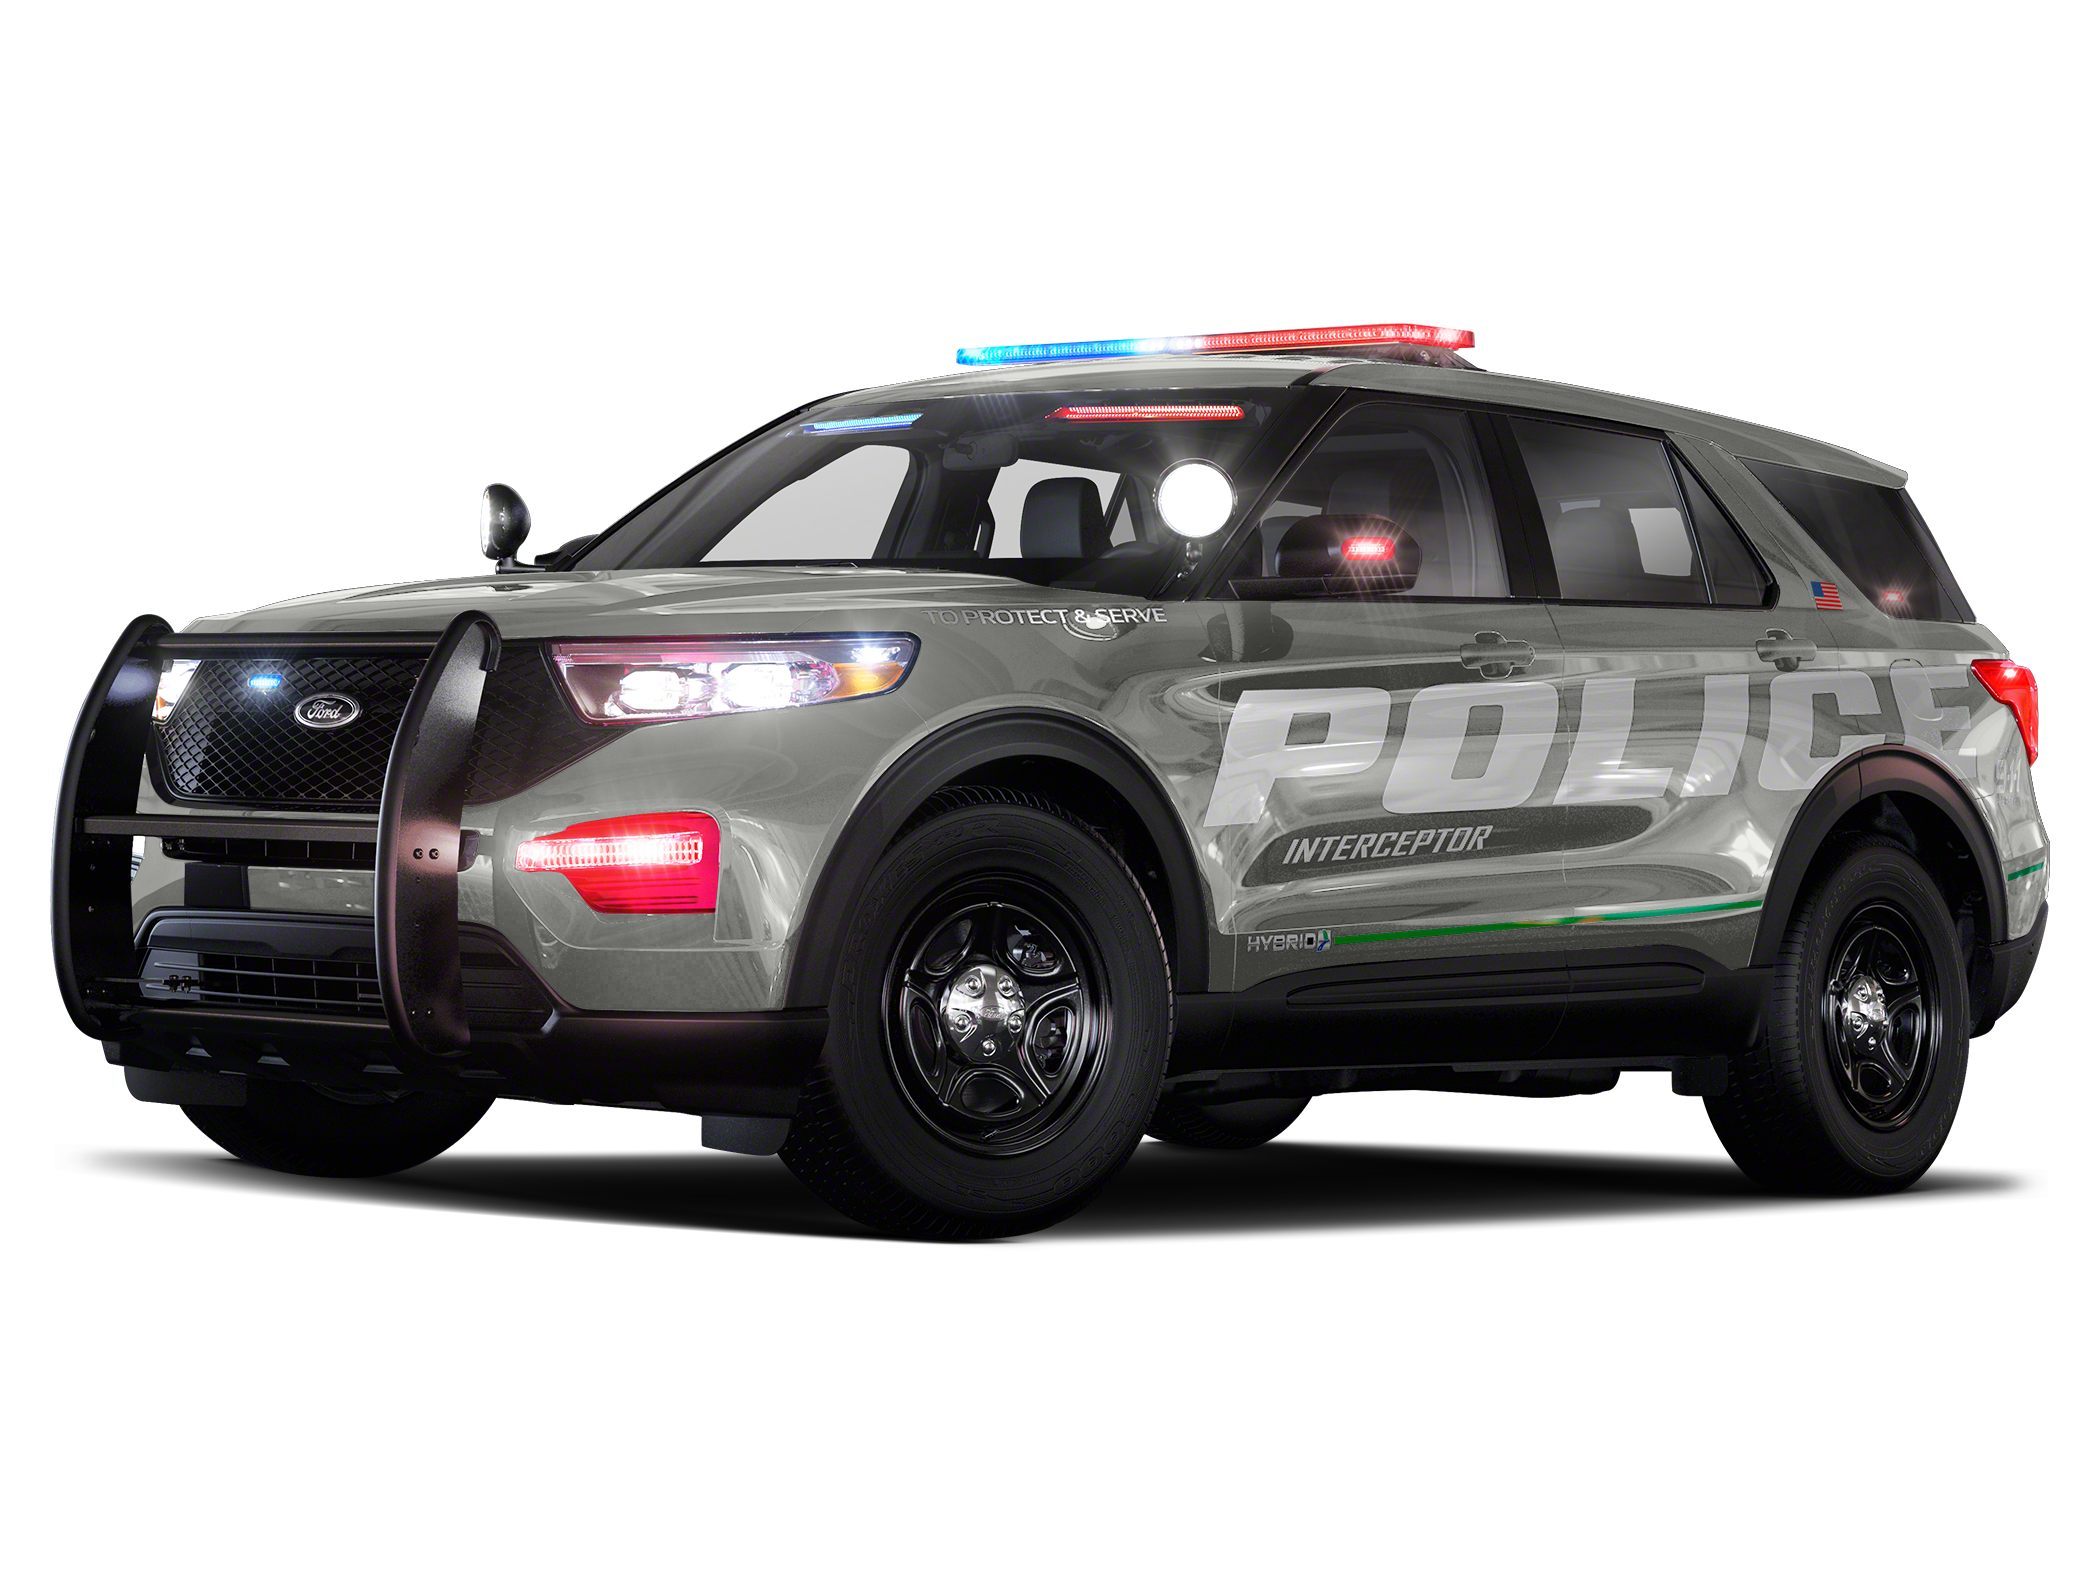 2022 ford police interceptor